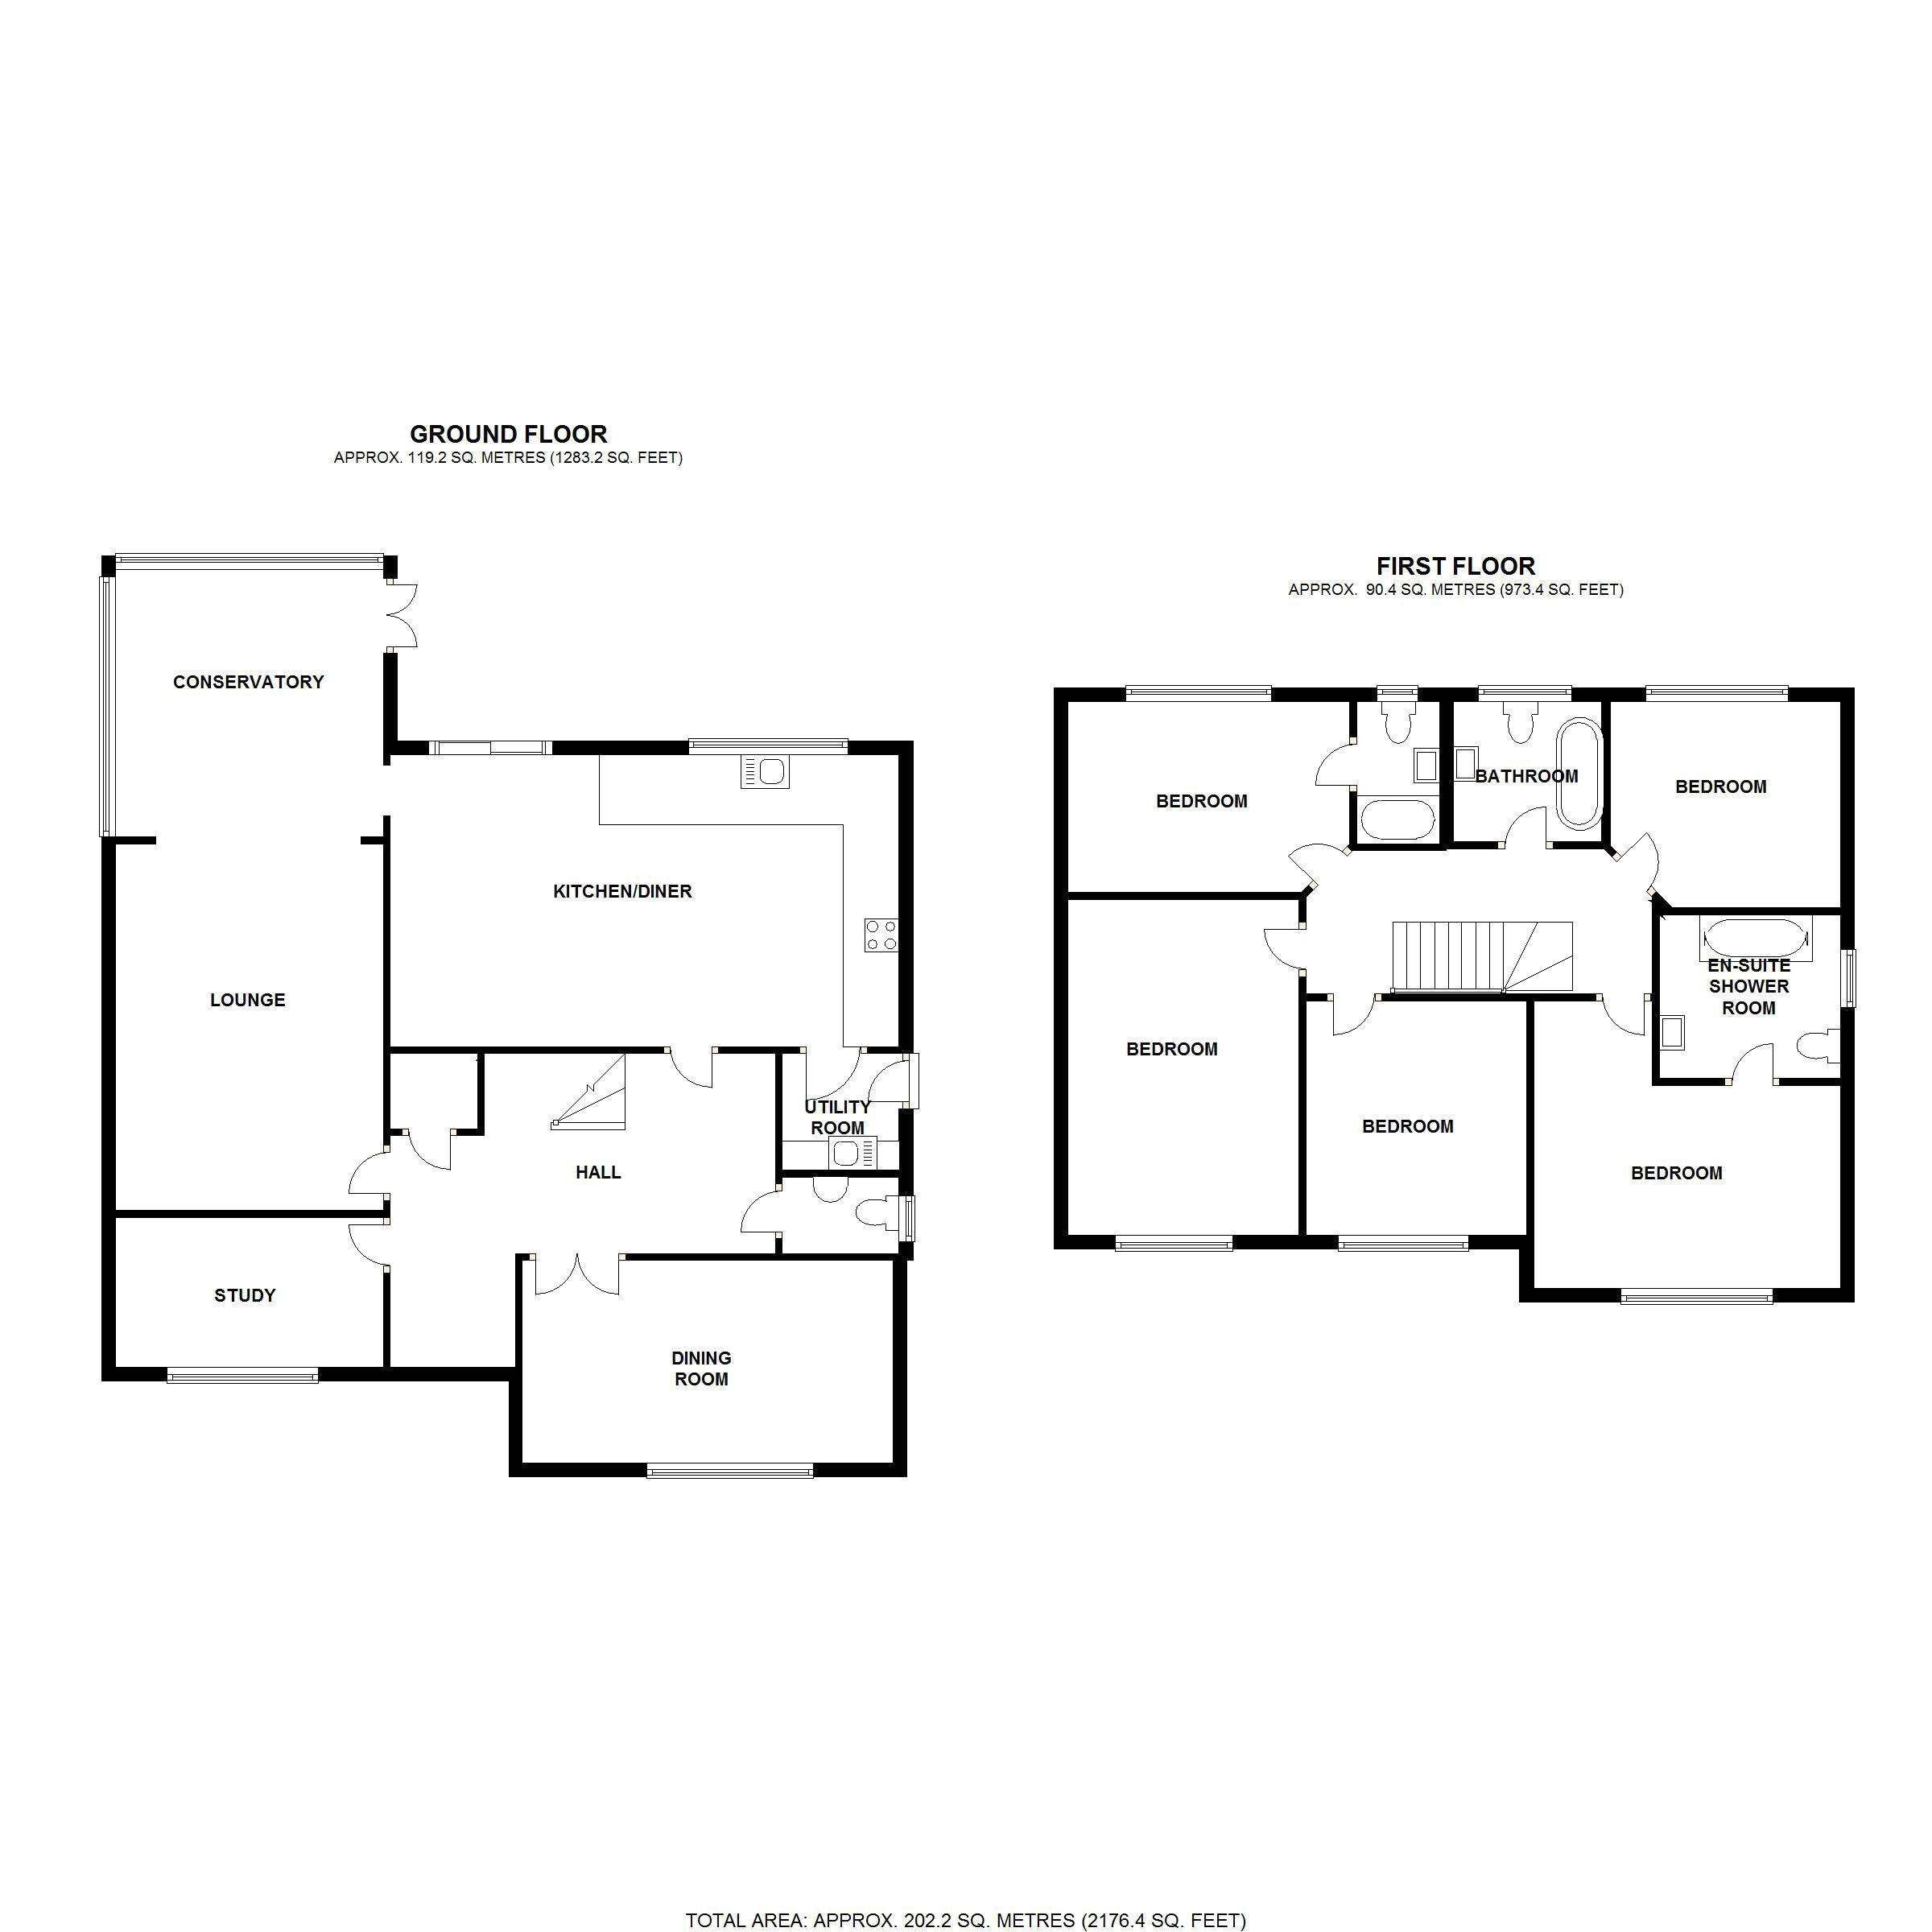 house floor plans online tritmonk floor plan home interior design ideas with images designer architecture canadian saltbox design